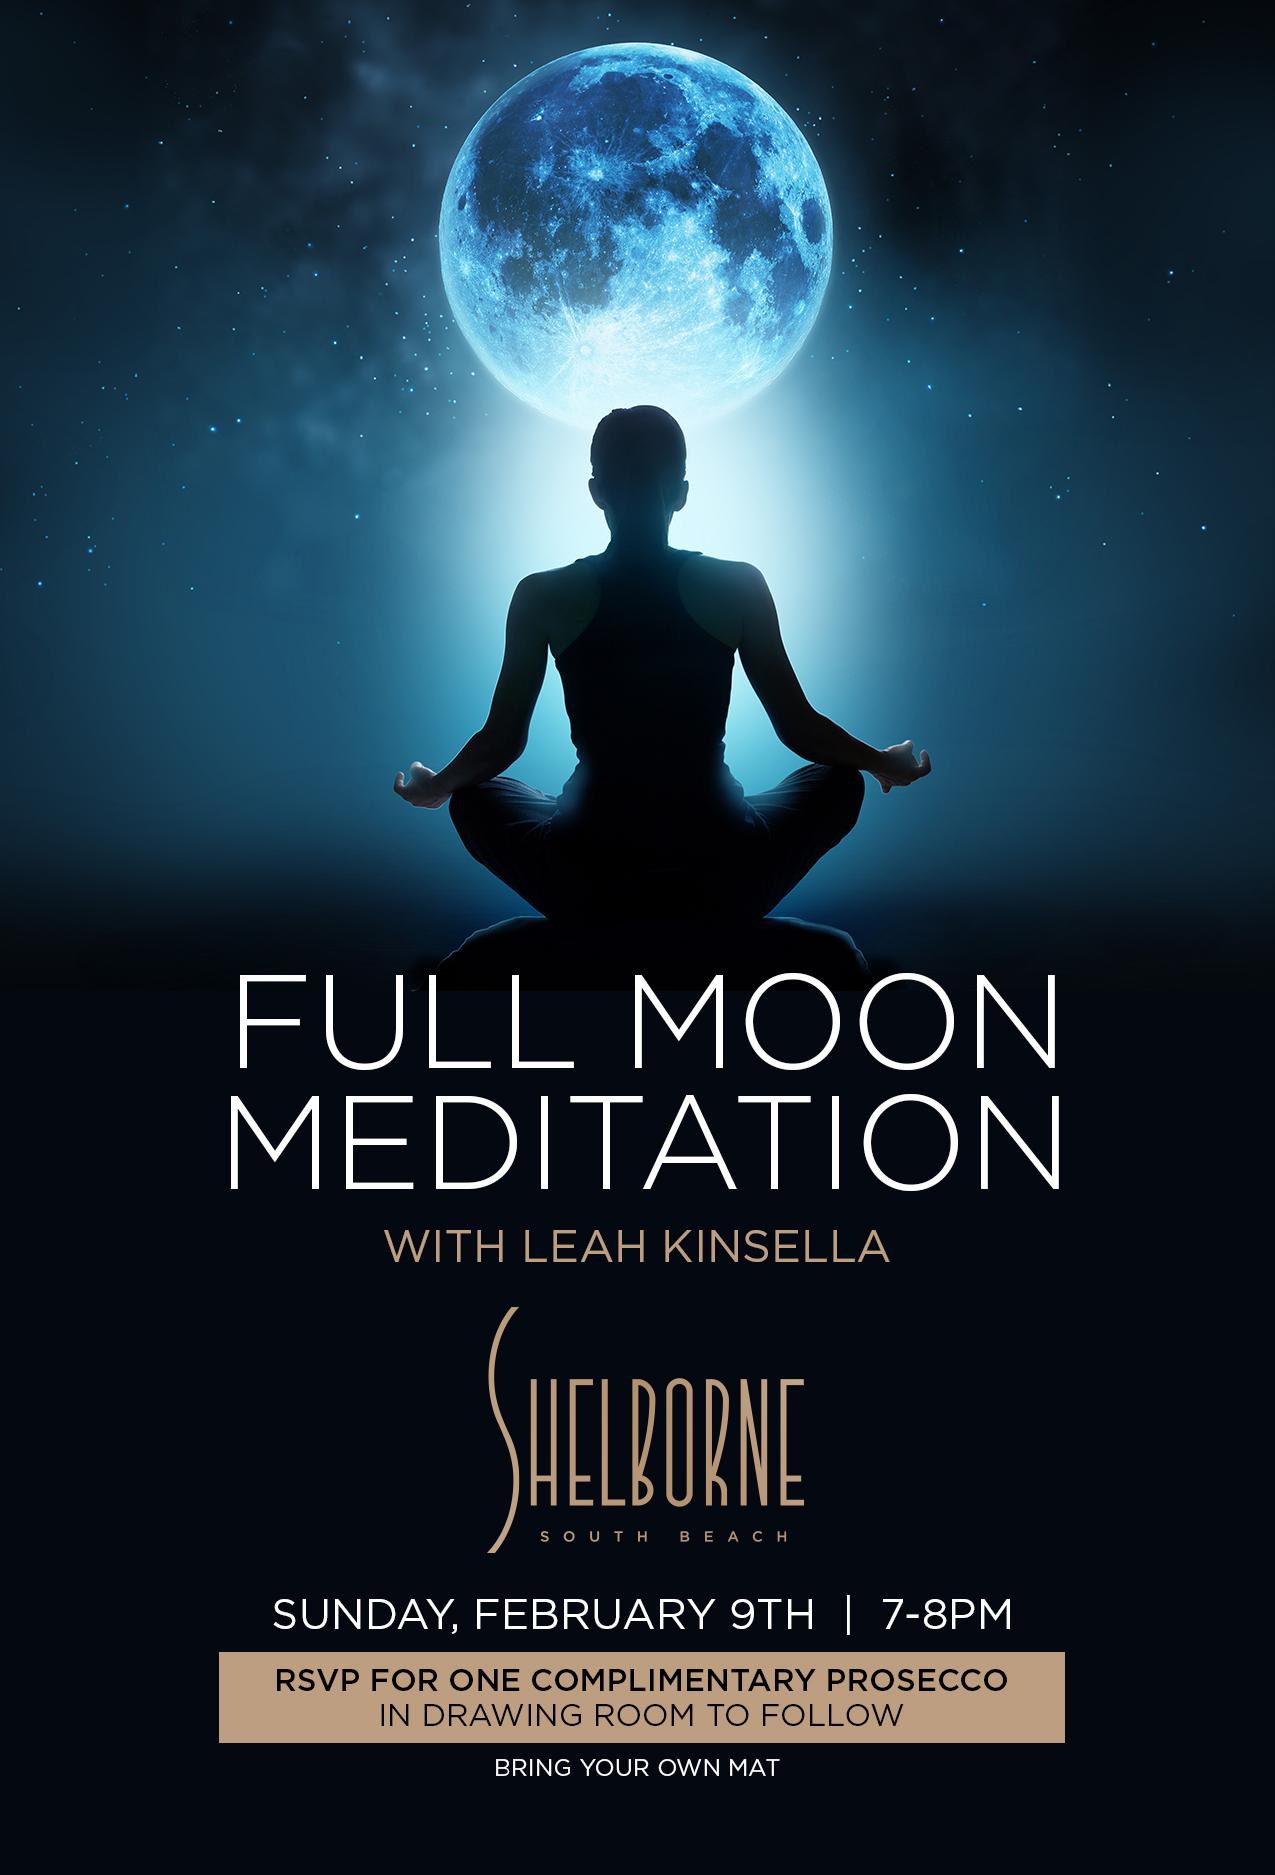 Full Moon Meditation at Shelborne South Beach